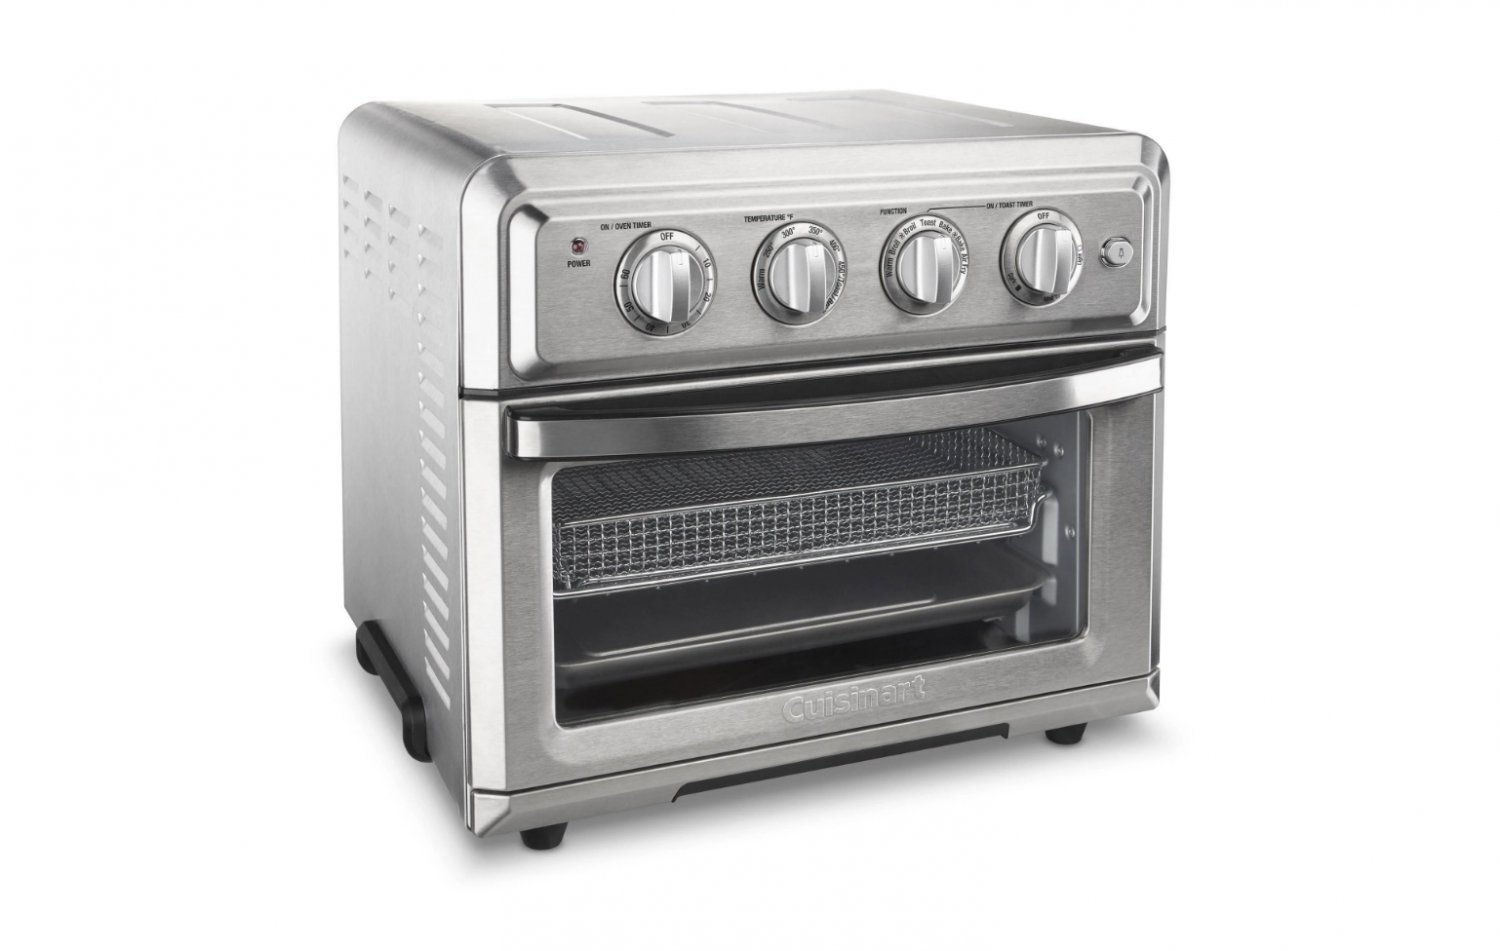 Cuisinart TOA 60 toaster oven air fryer $79.99